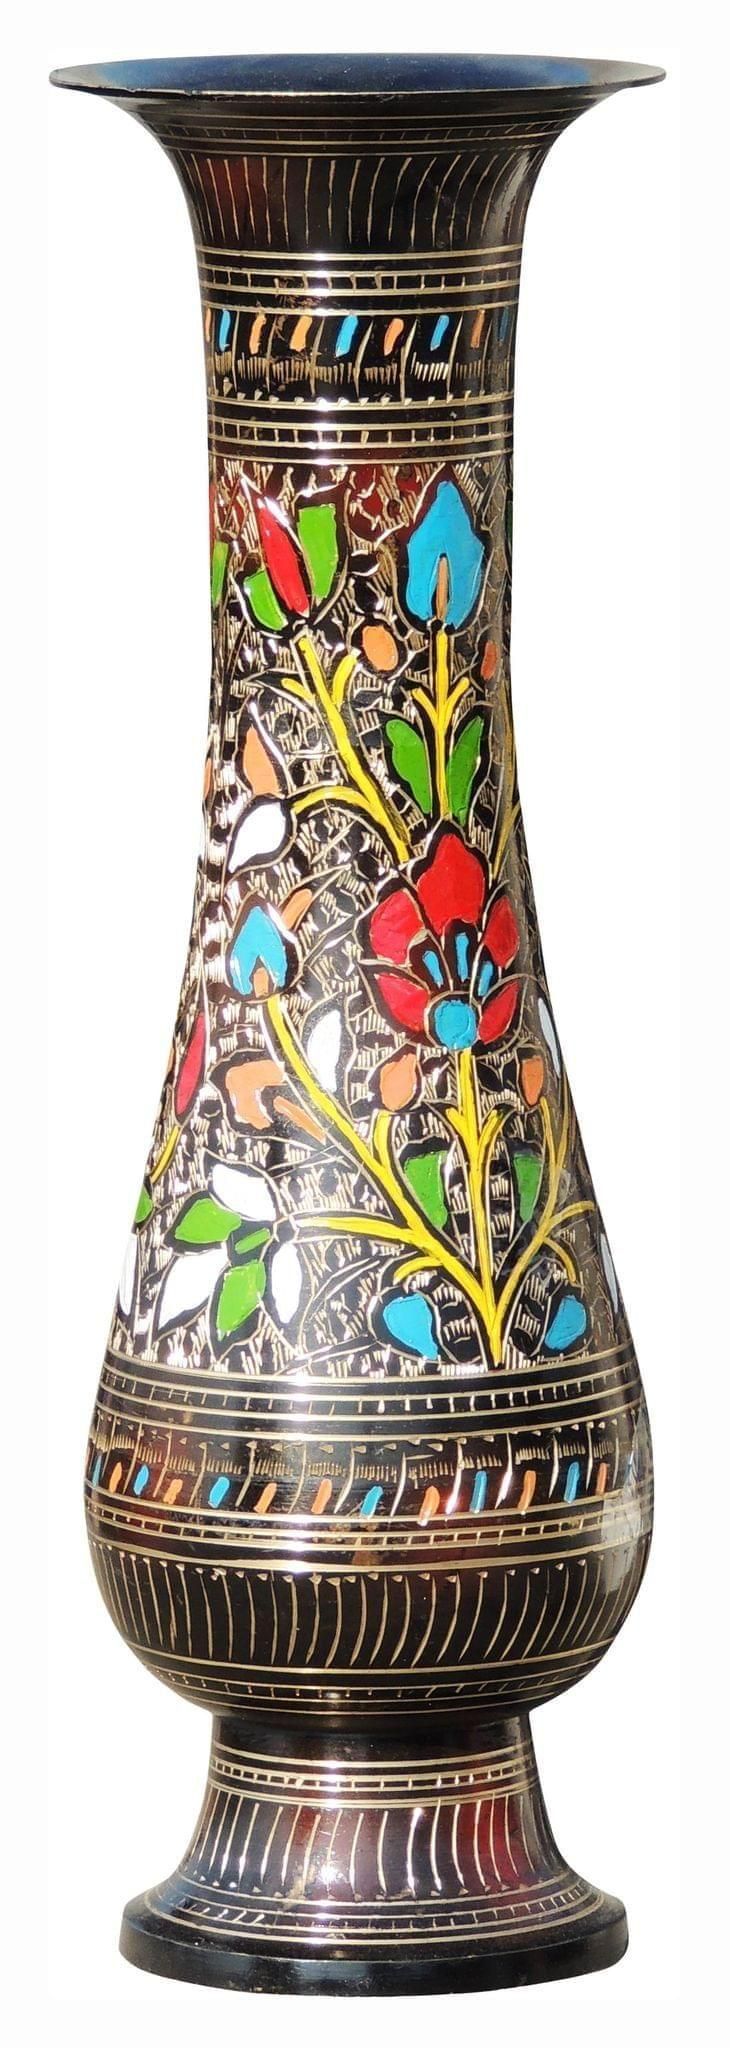 Brass Home & Garden Decorative Flower Pot, Vase - 4.5*4.5*13.2 inch (F397 E)